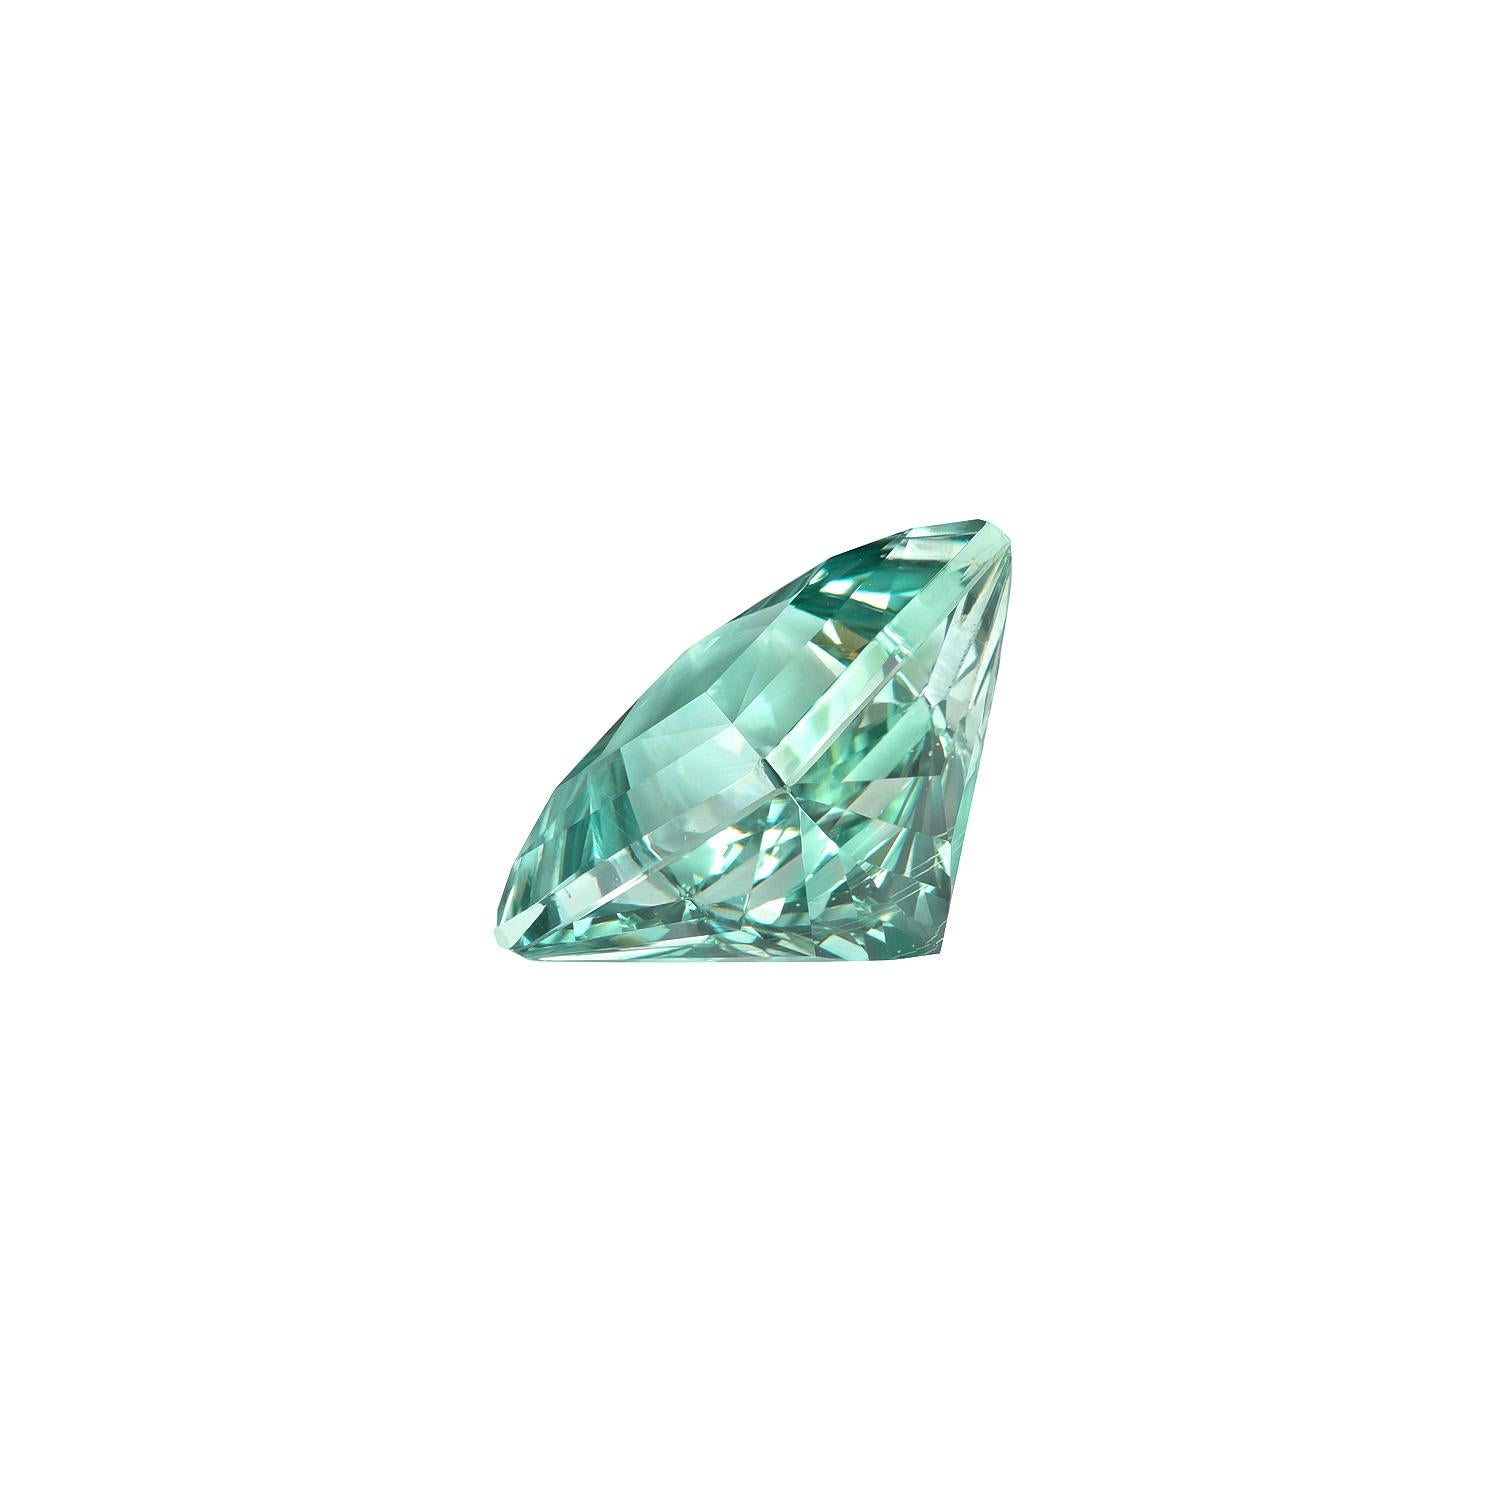 Modern Green Beryl Ring Gem Princess Cut 15.52 Carat Unset Loose Gemstone For Sale